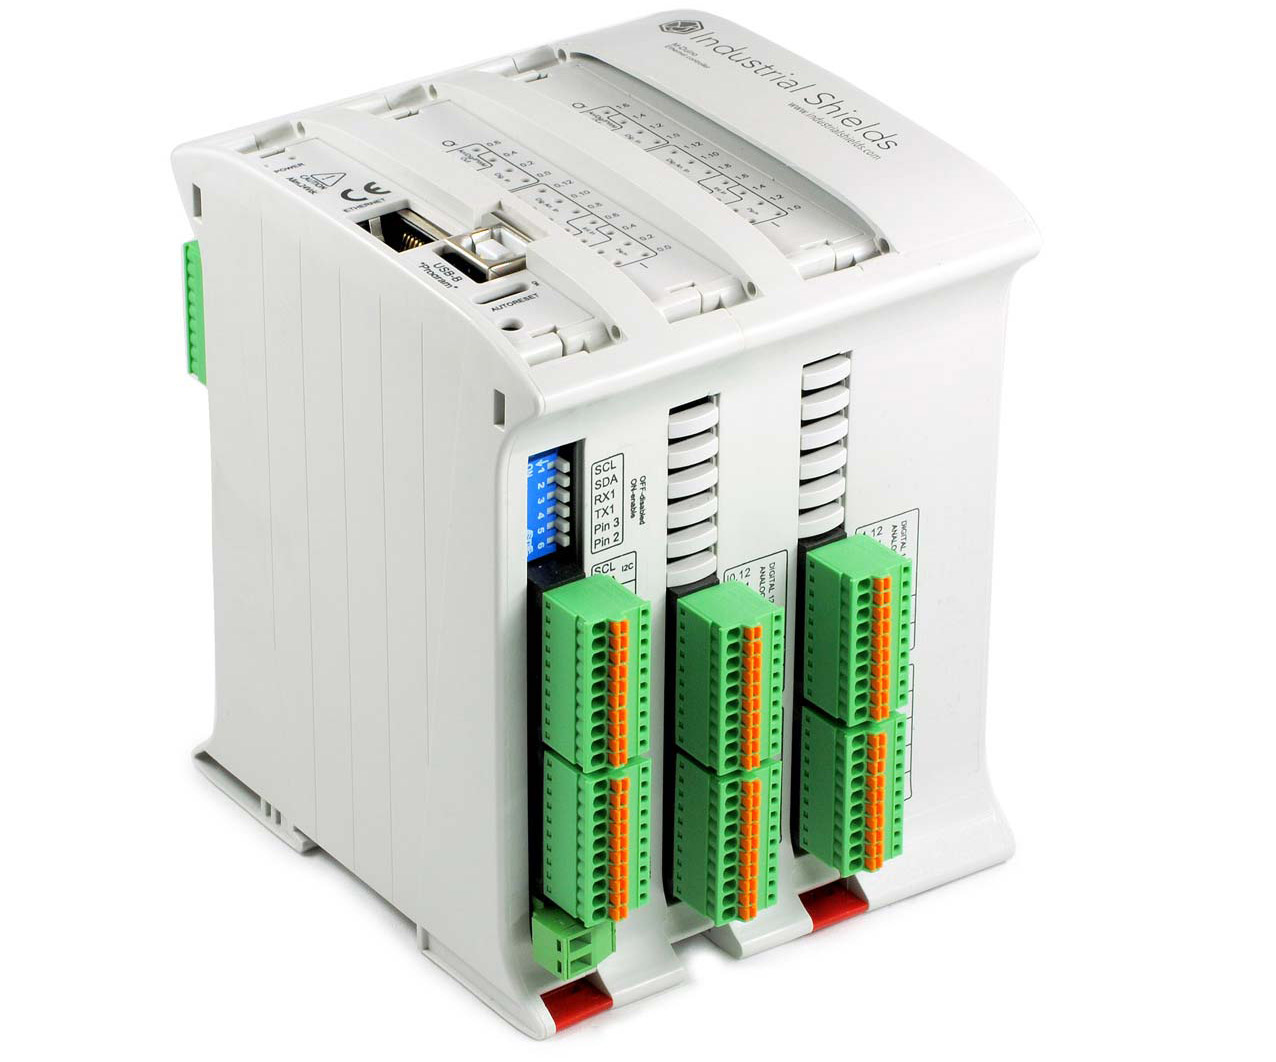 Industrial Shields M-DUINO PLC Arduino Ethernet 42 I/Os Analog/Digital PLUS - Click to Enlarge